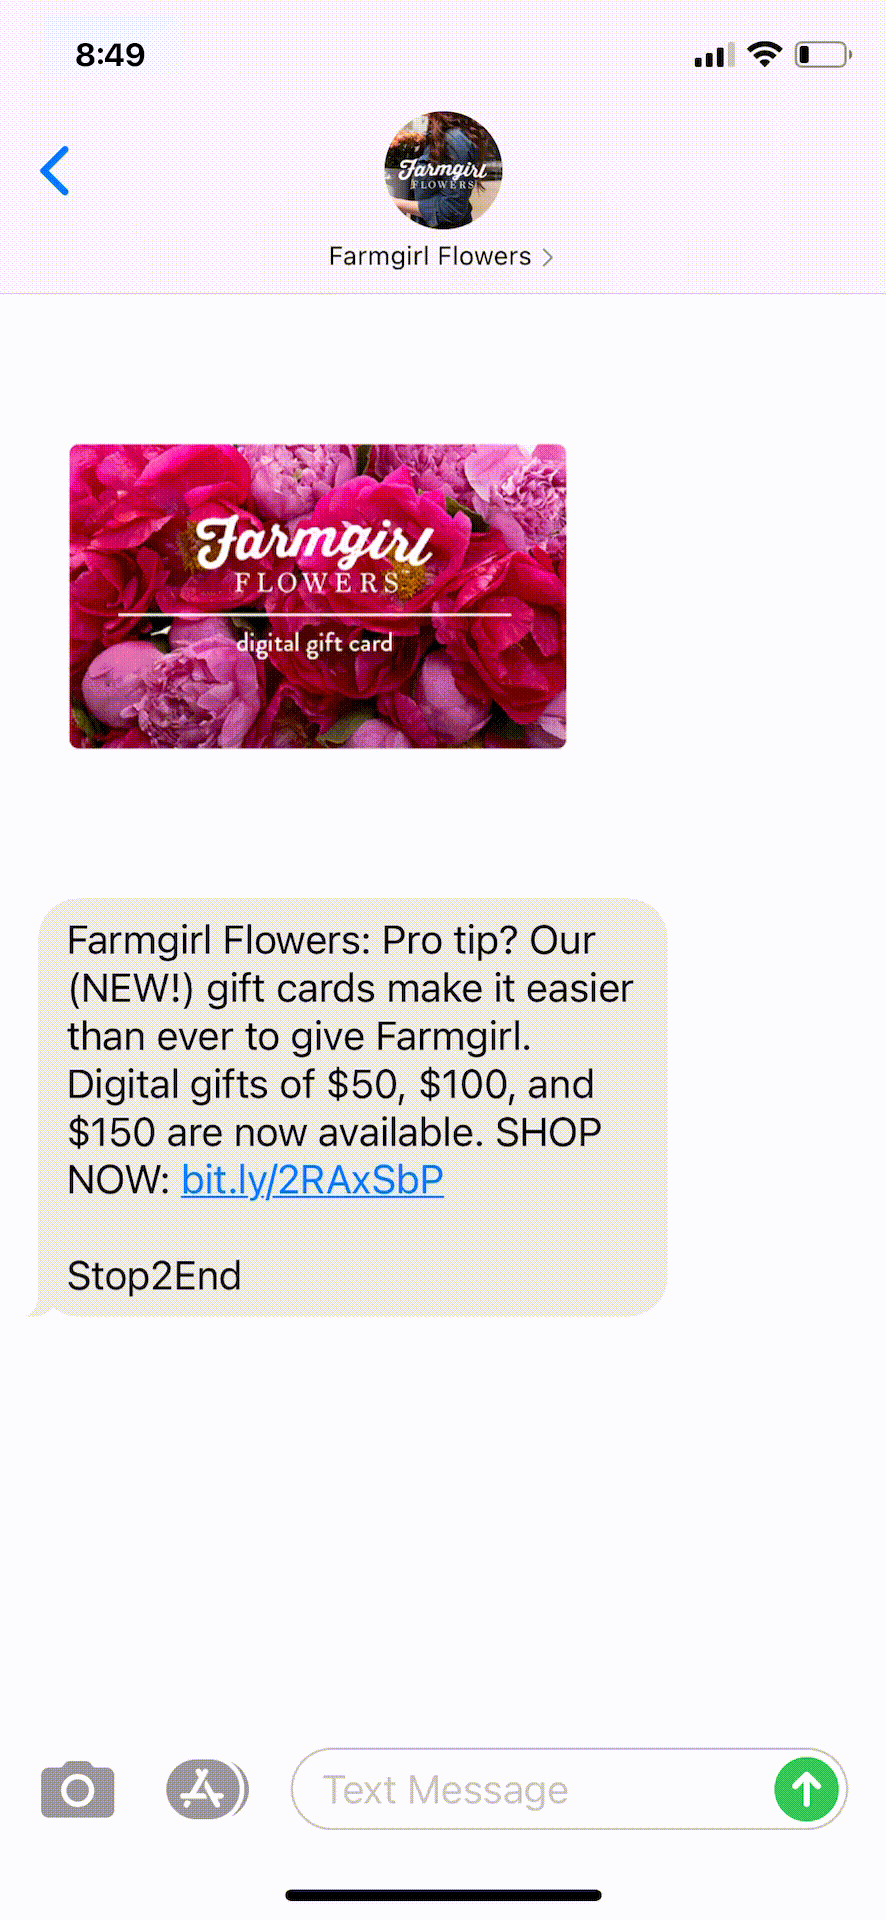 Farmgirl-Flowers-Text-Message-Marketing-Example-05.25.2021